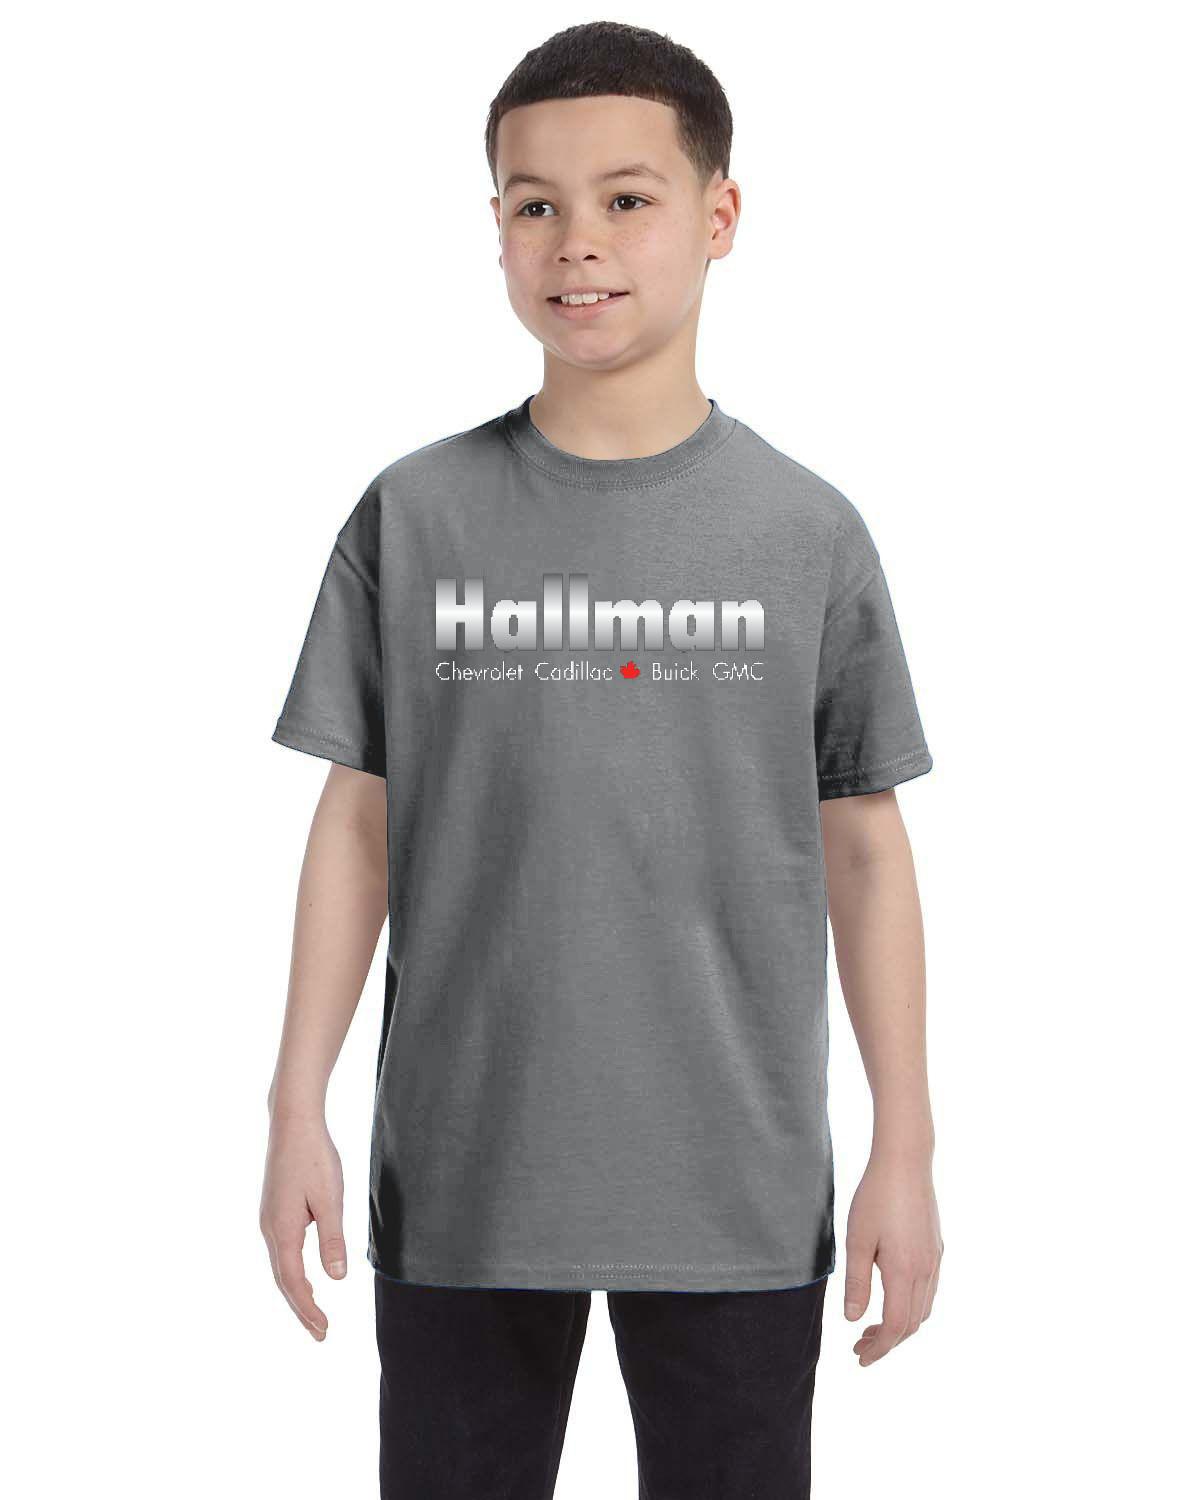 Hallman Kid's T-Shirt